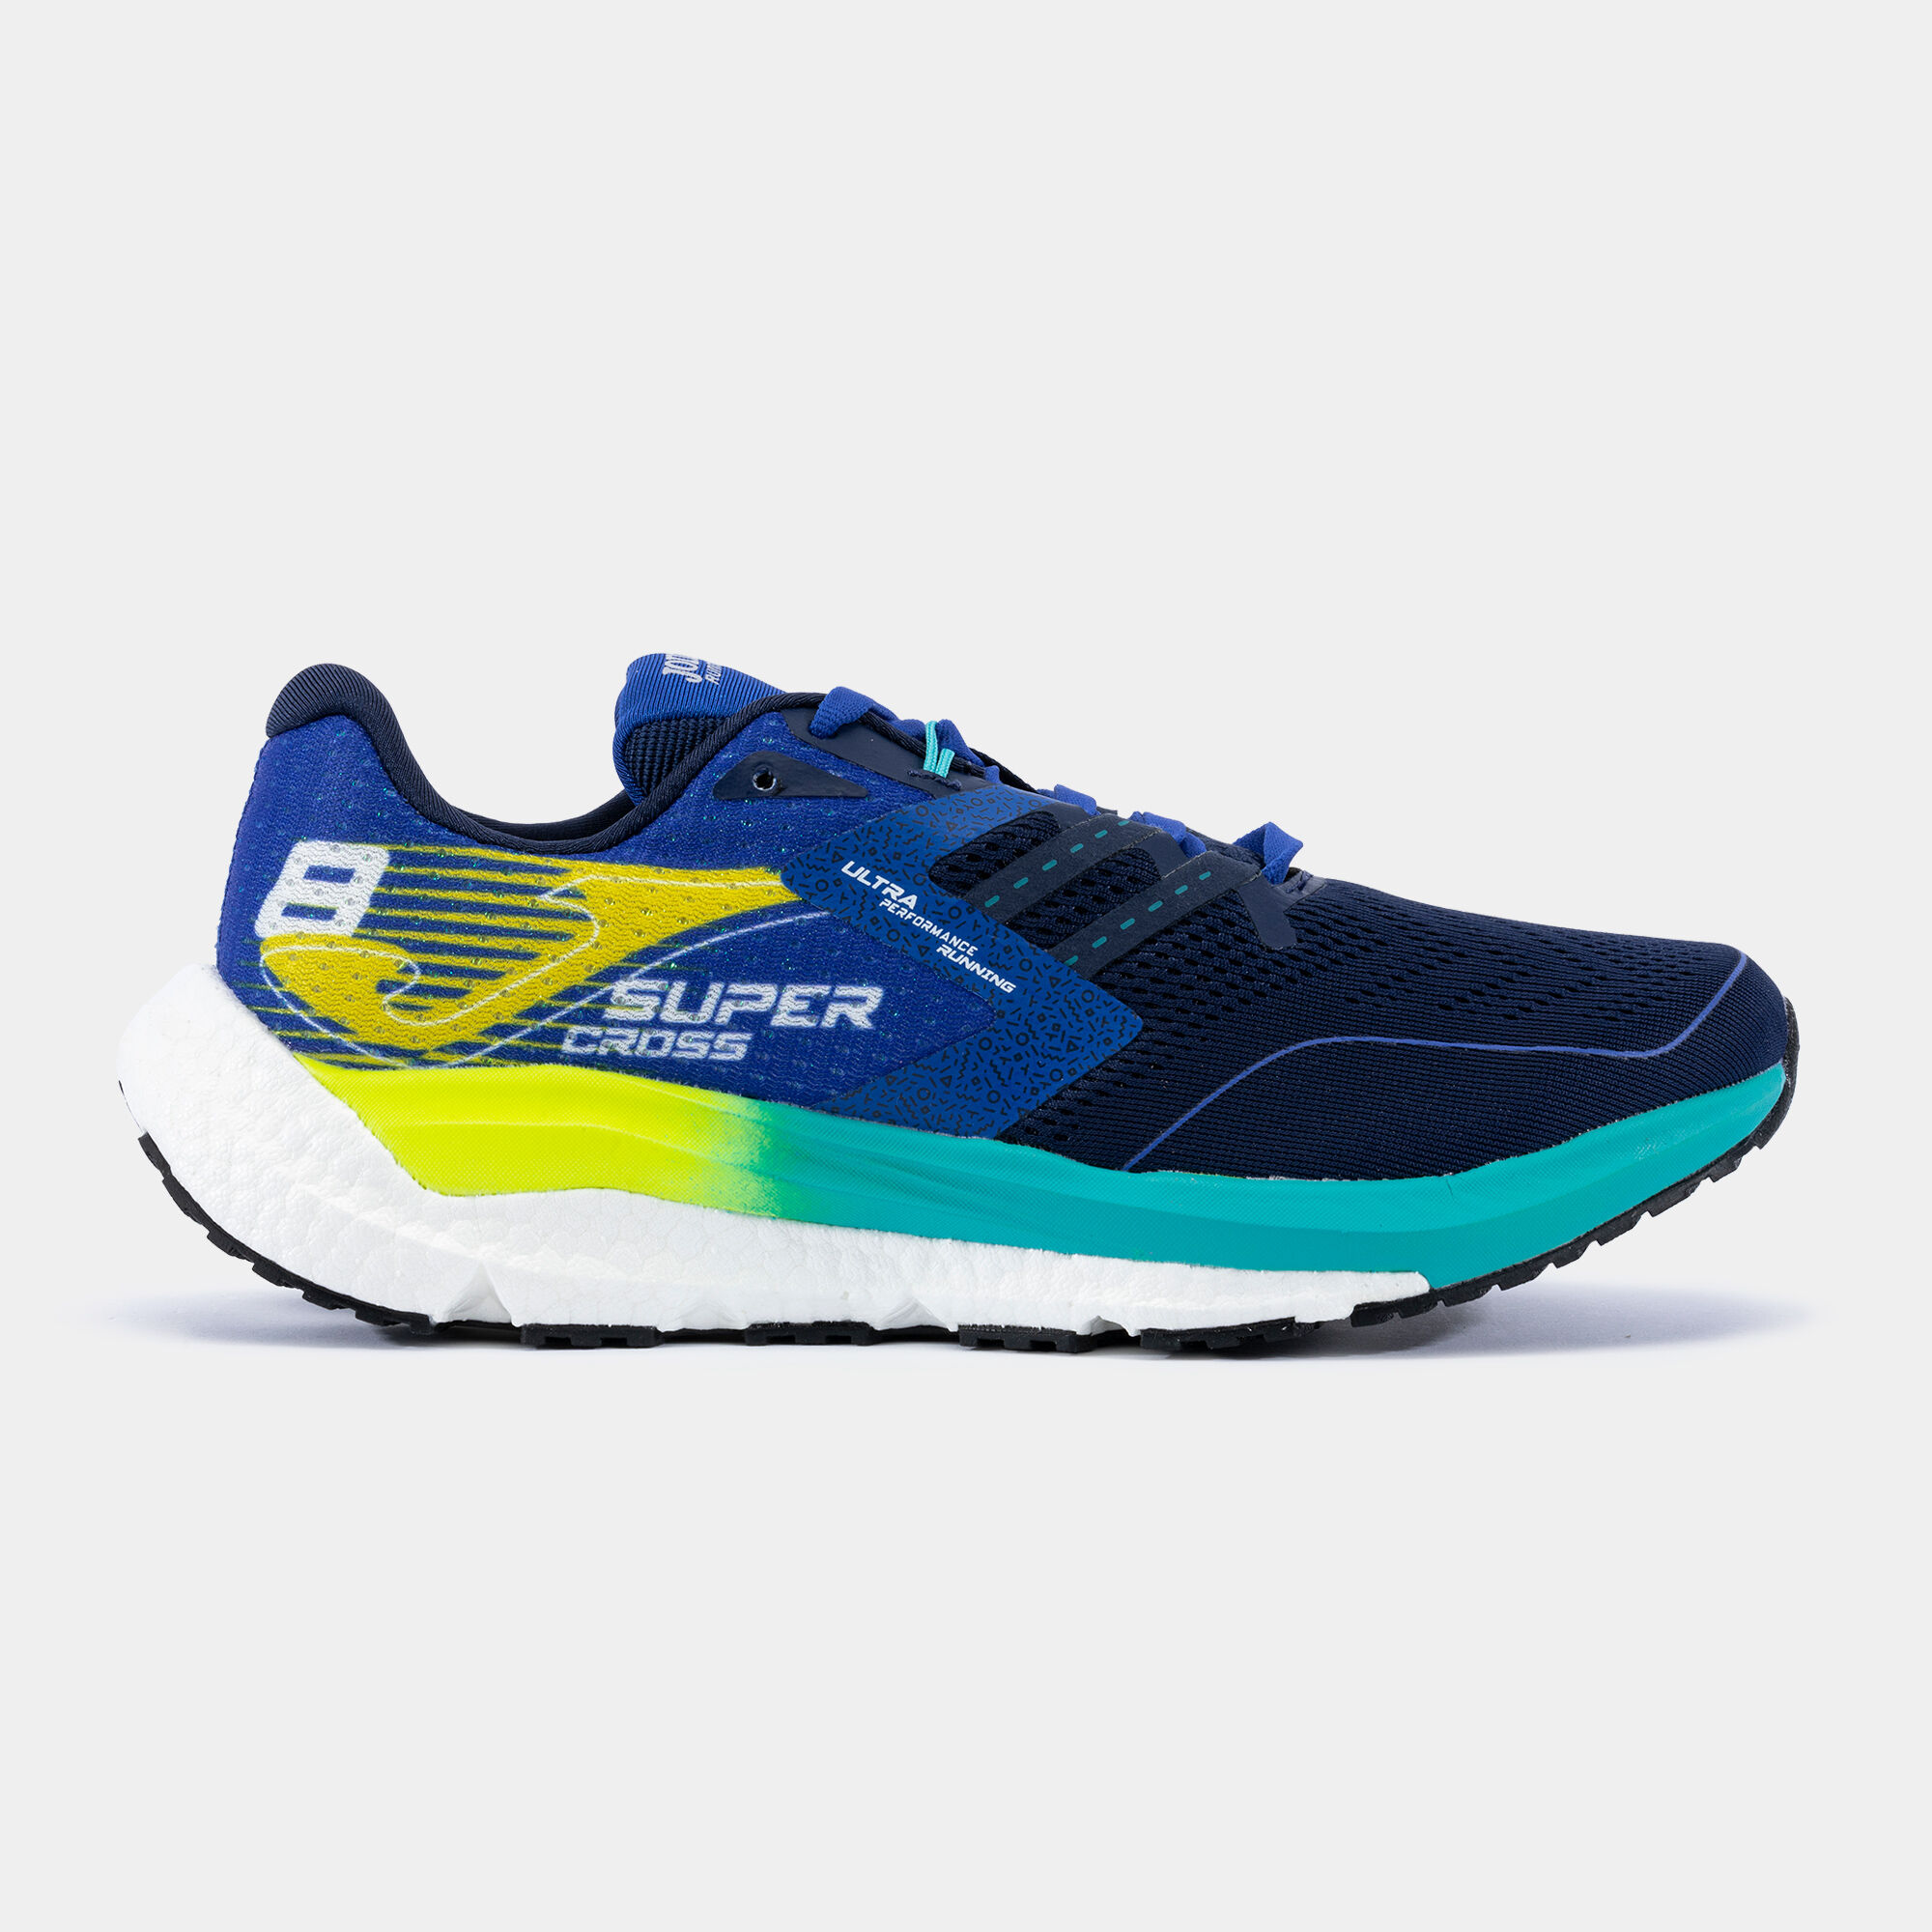 Running shoes R.Supercross 23 man navy blue electric blue